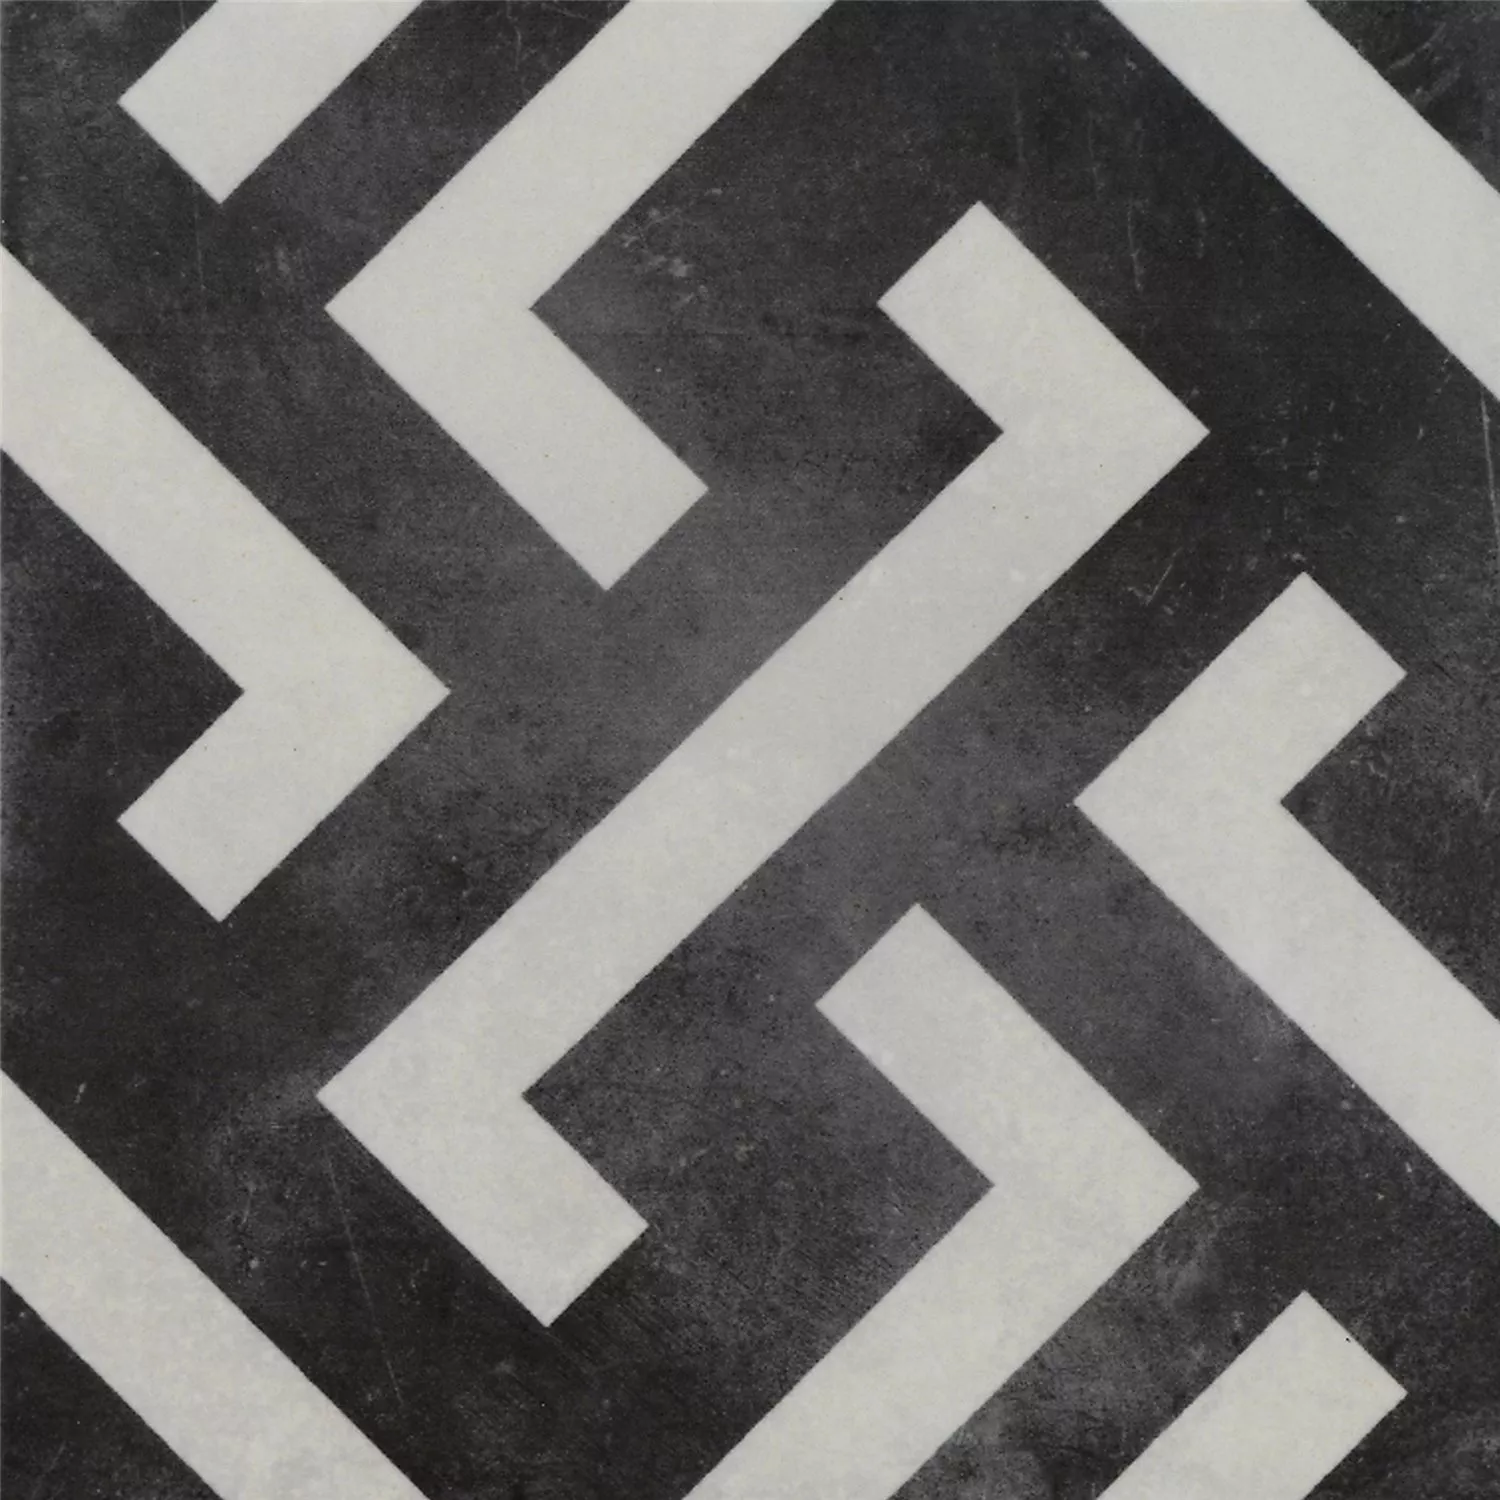 Sample Cement Tiles Optic Gotik Depero 22,3x22,3cm